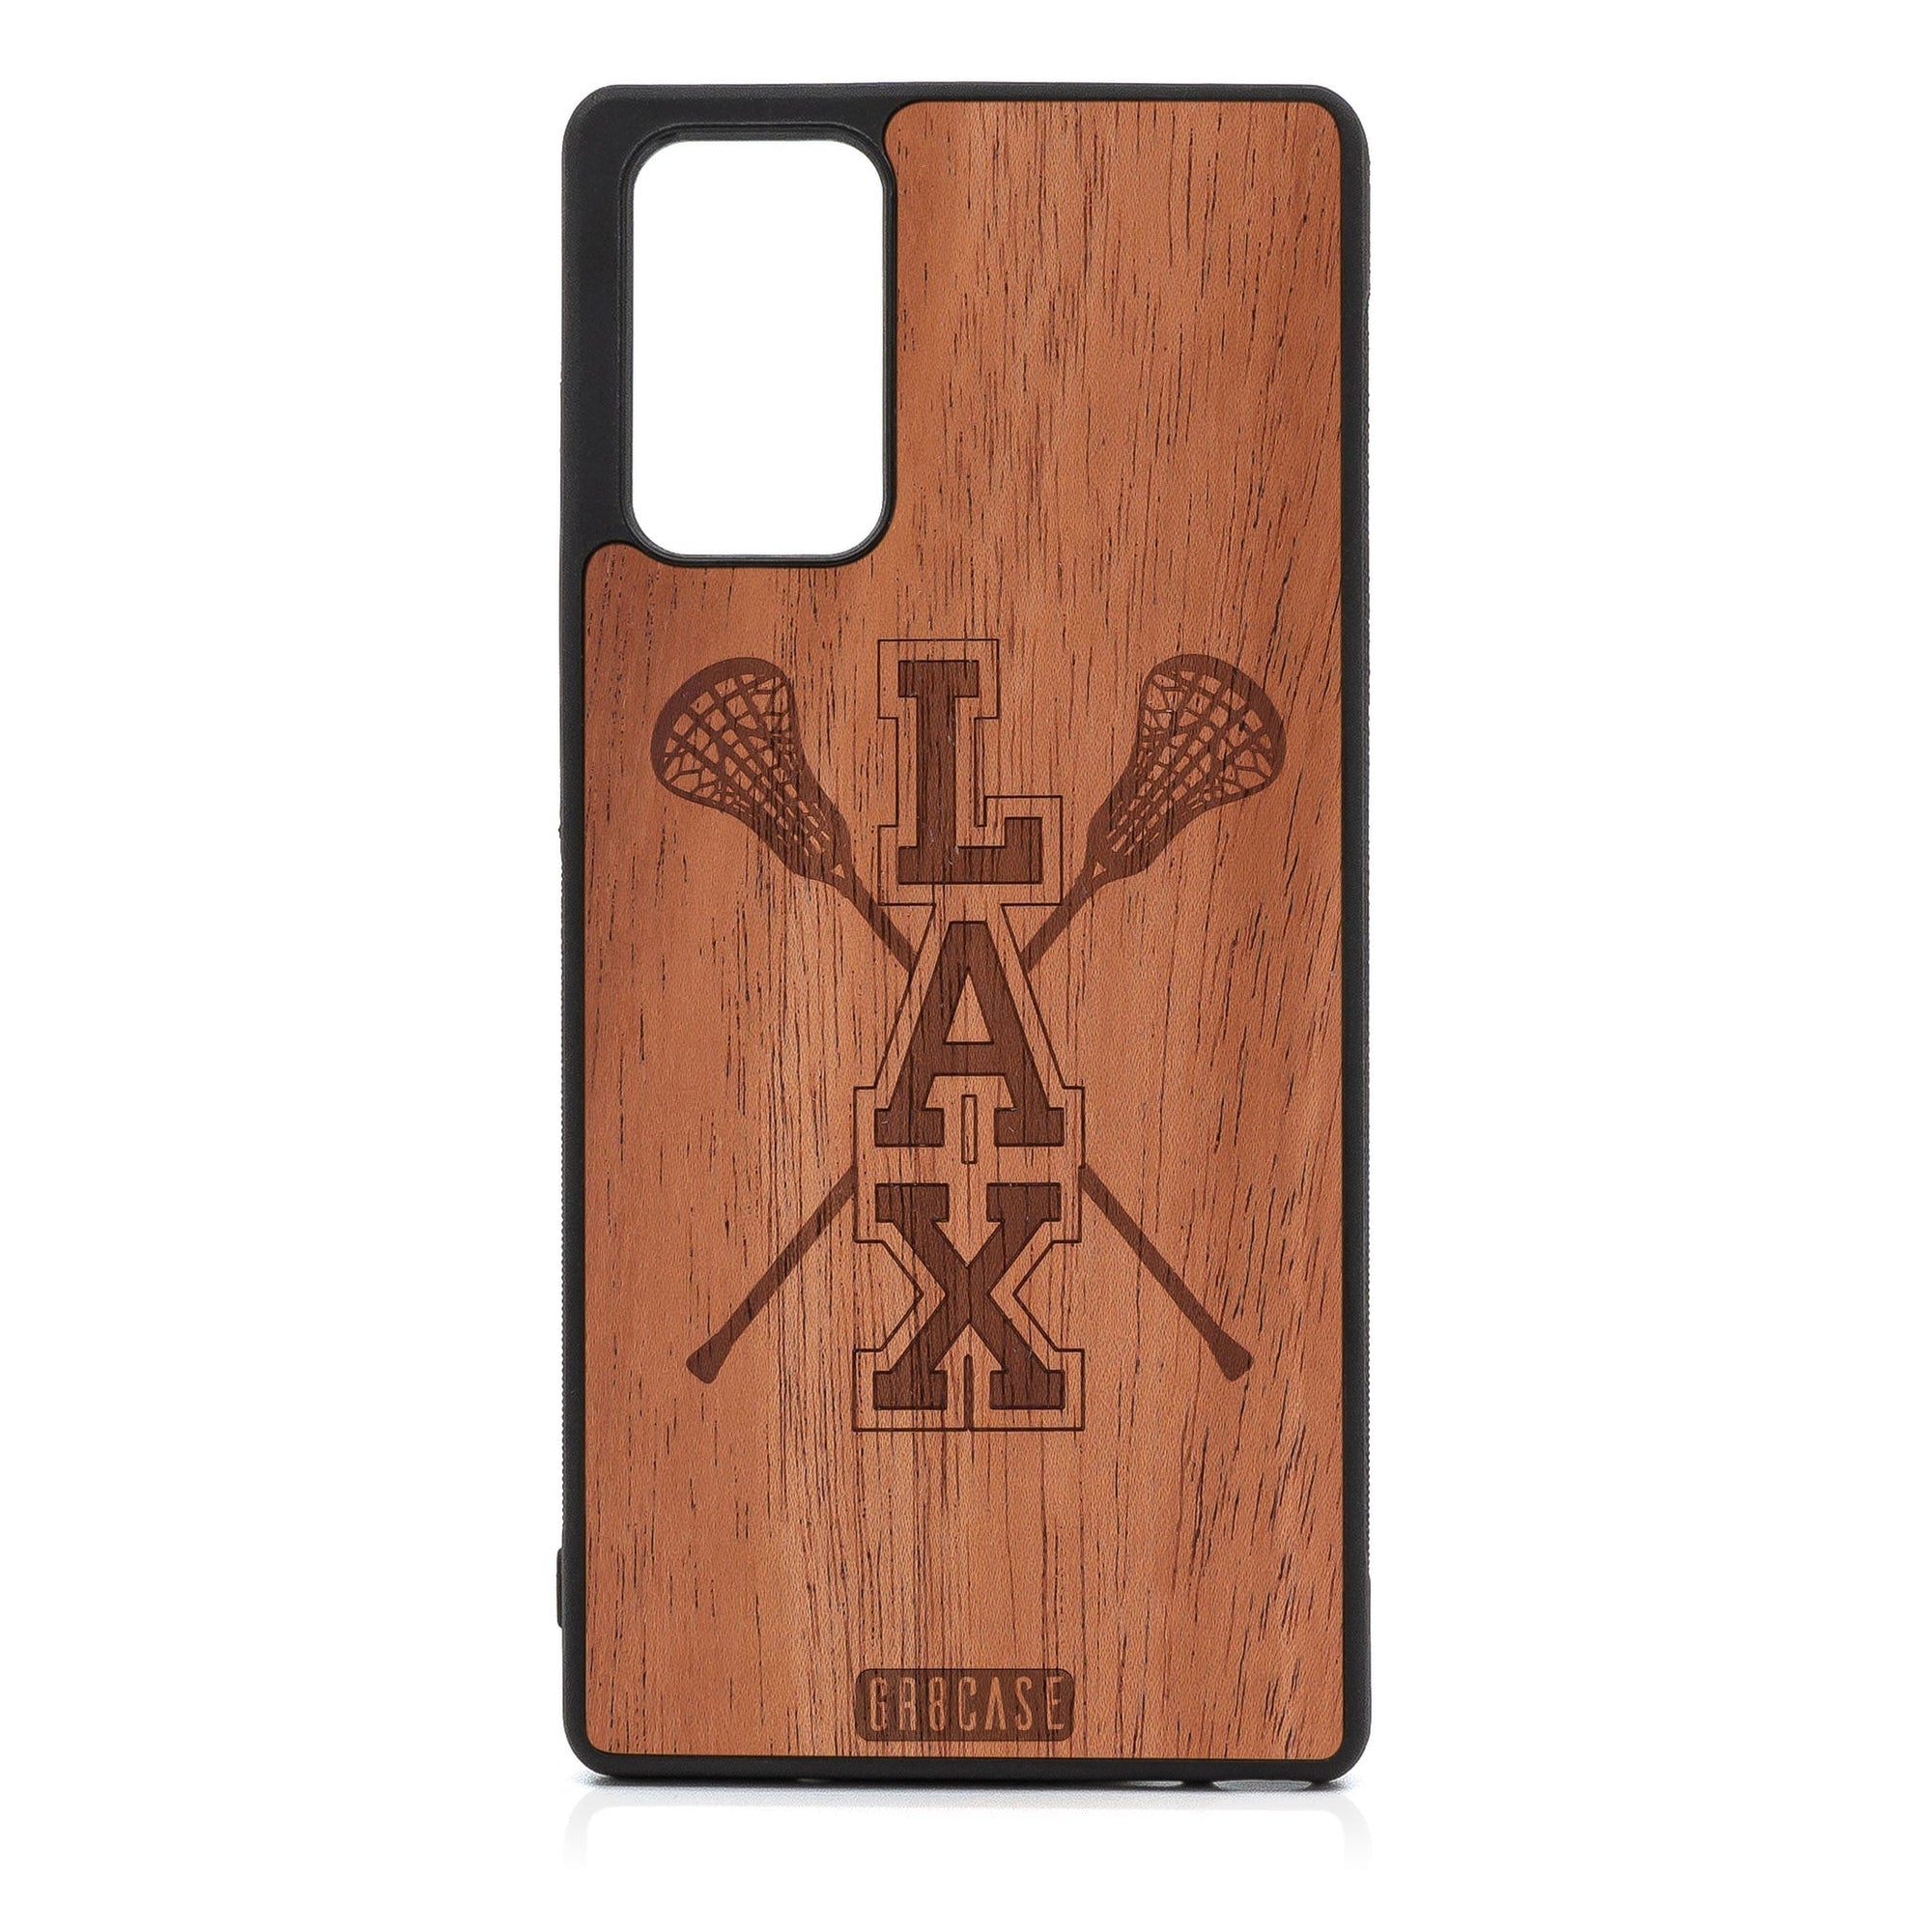 Lacrosse (LAX) Sticks Design Wood Case For Samsung Galaxy A72 5G